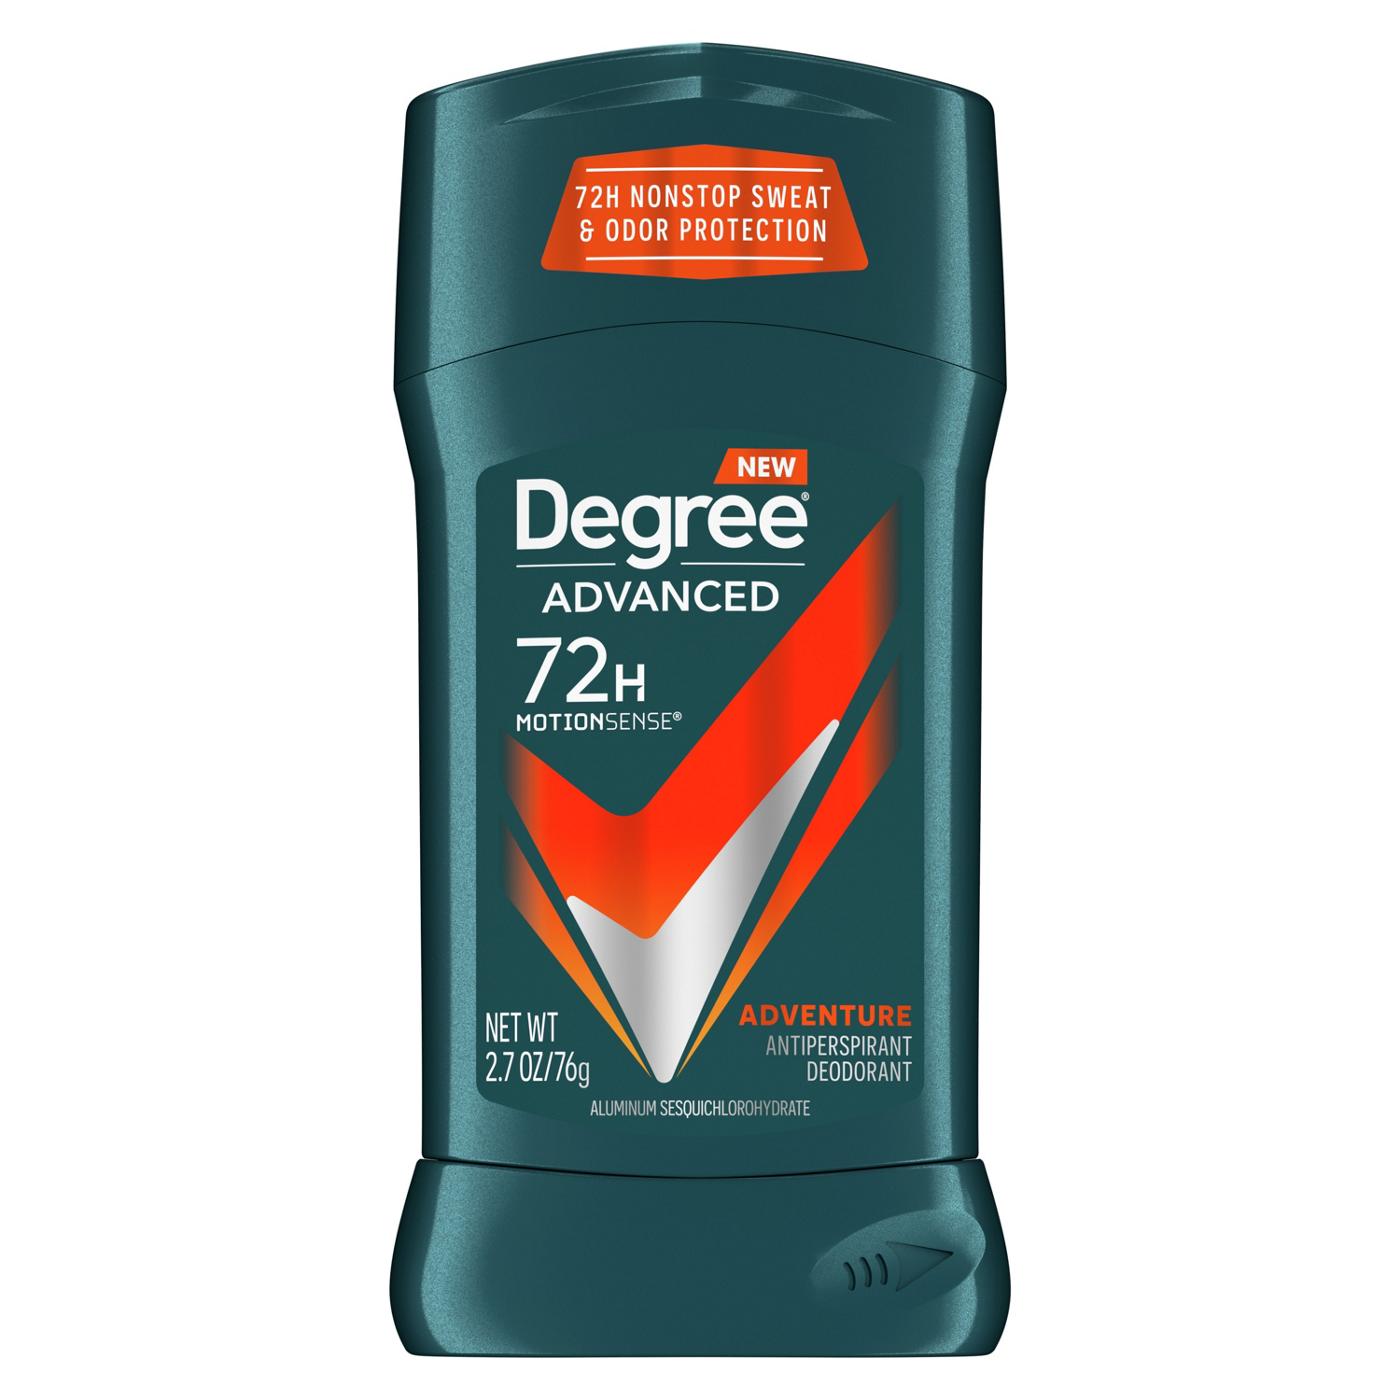 Degree Men 72 Hr Advanced Protection Antiperspirant Deodorant - Adventure; image 1 of 2